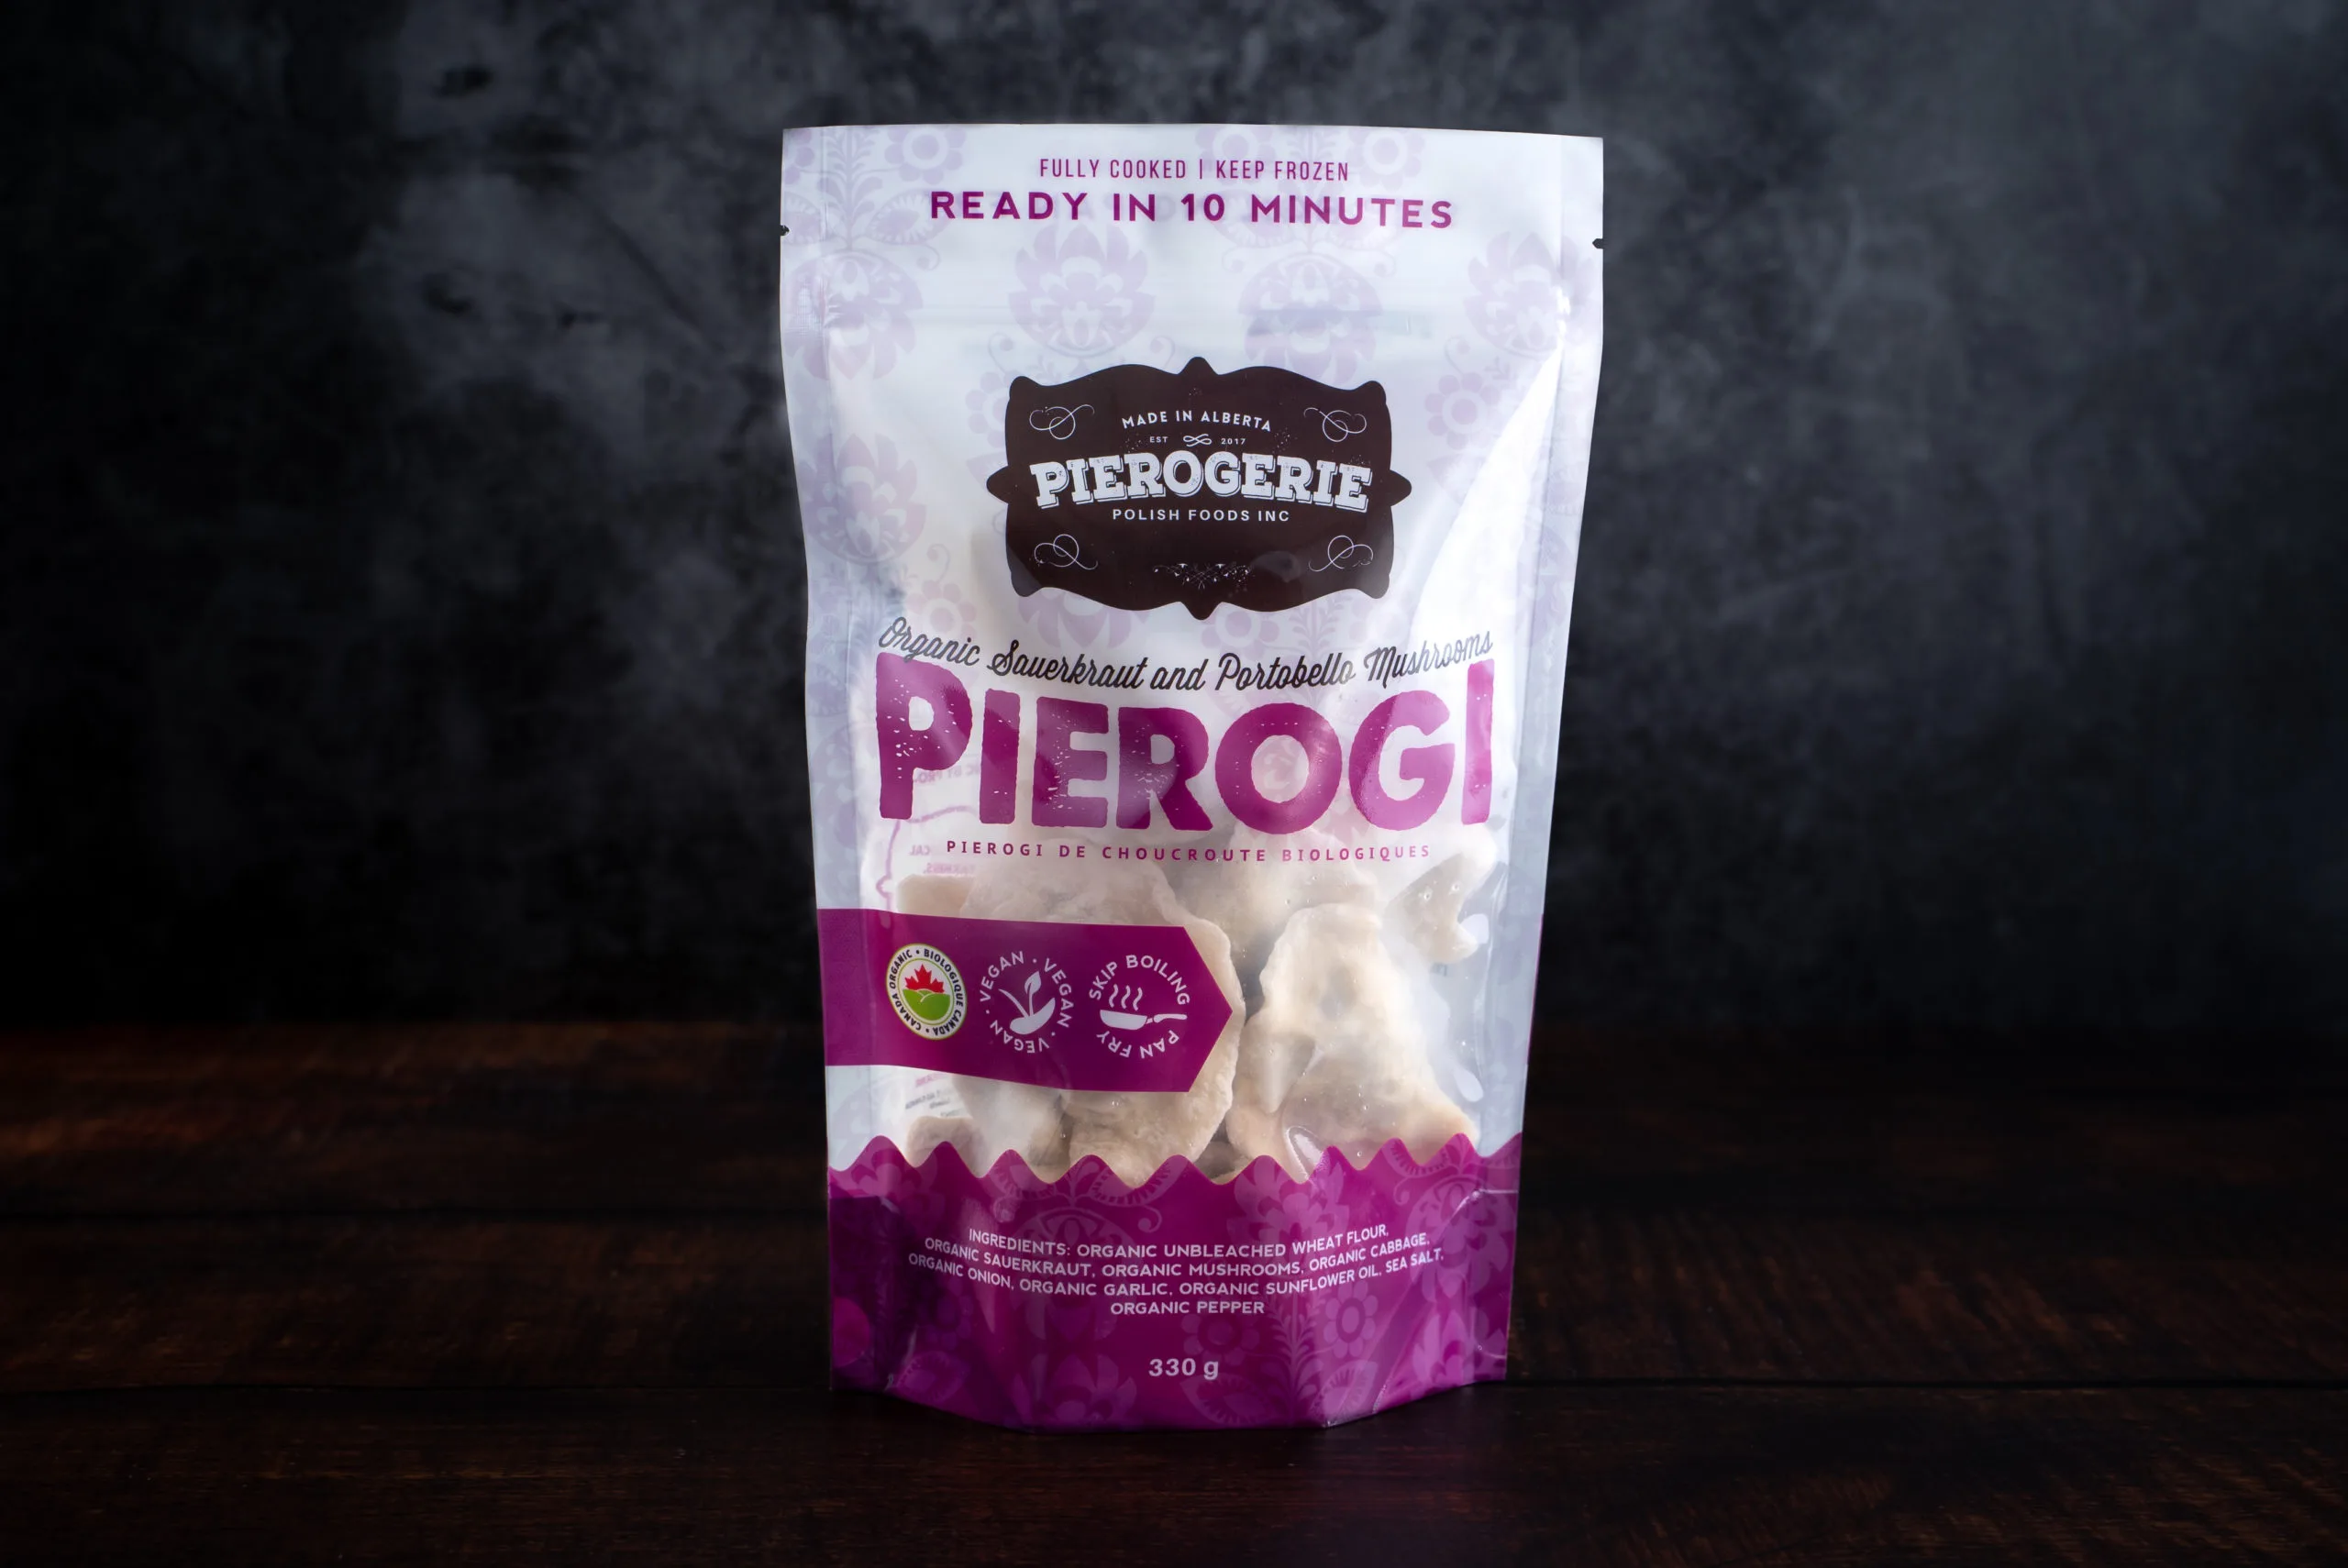 A bag of Sauerkraut and Portobello Mushroom Pierogi showing the front